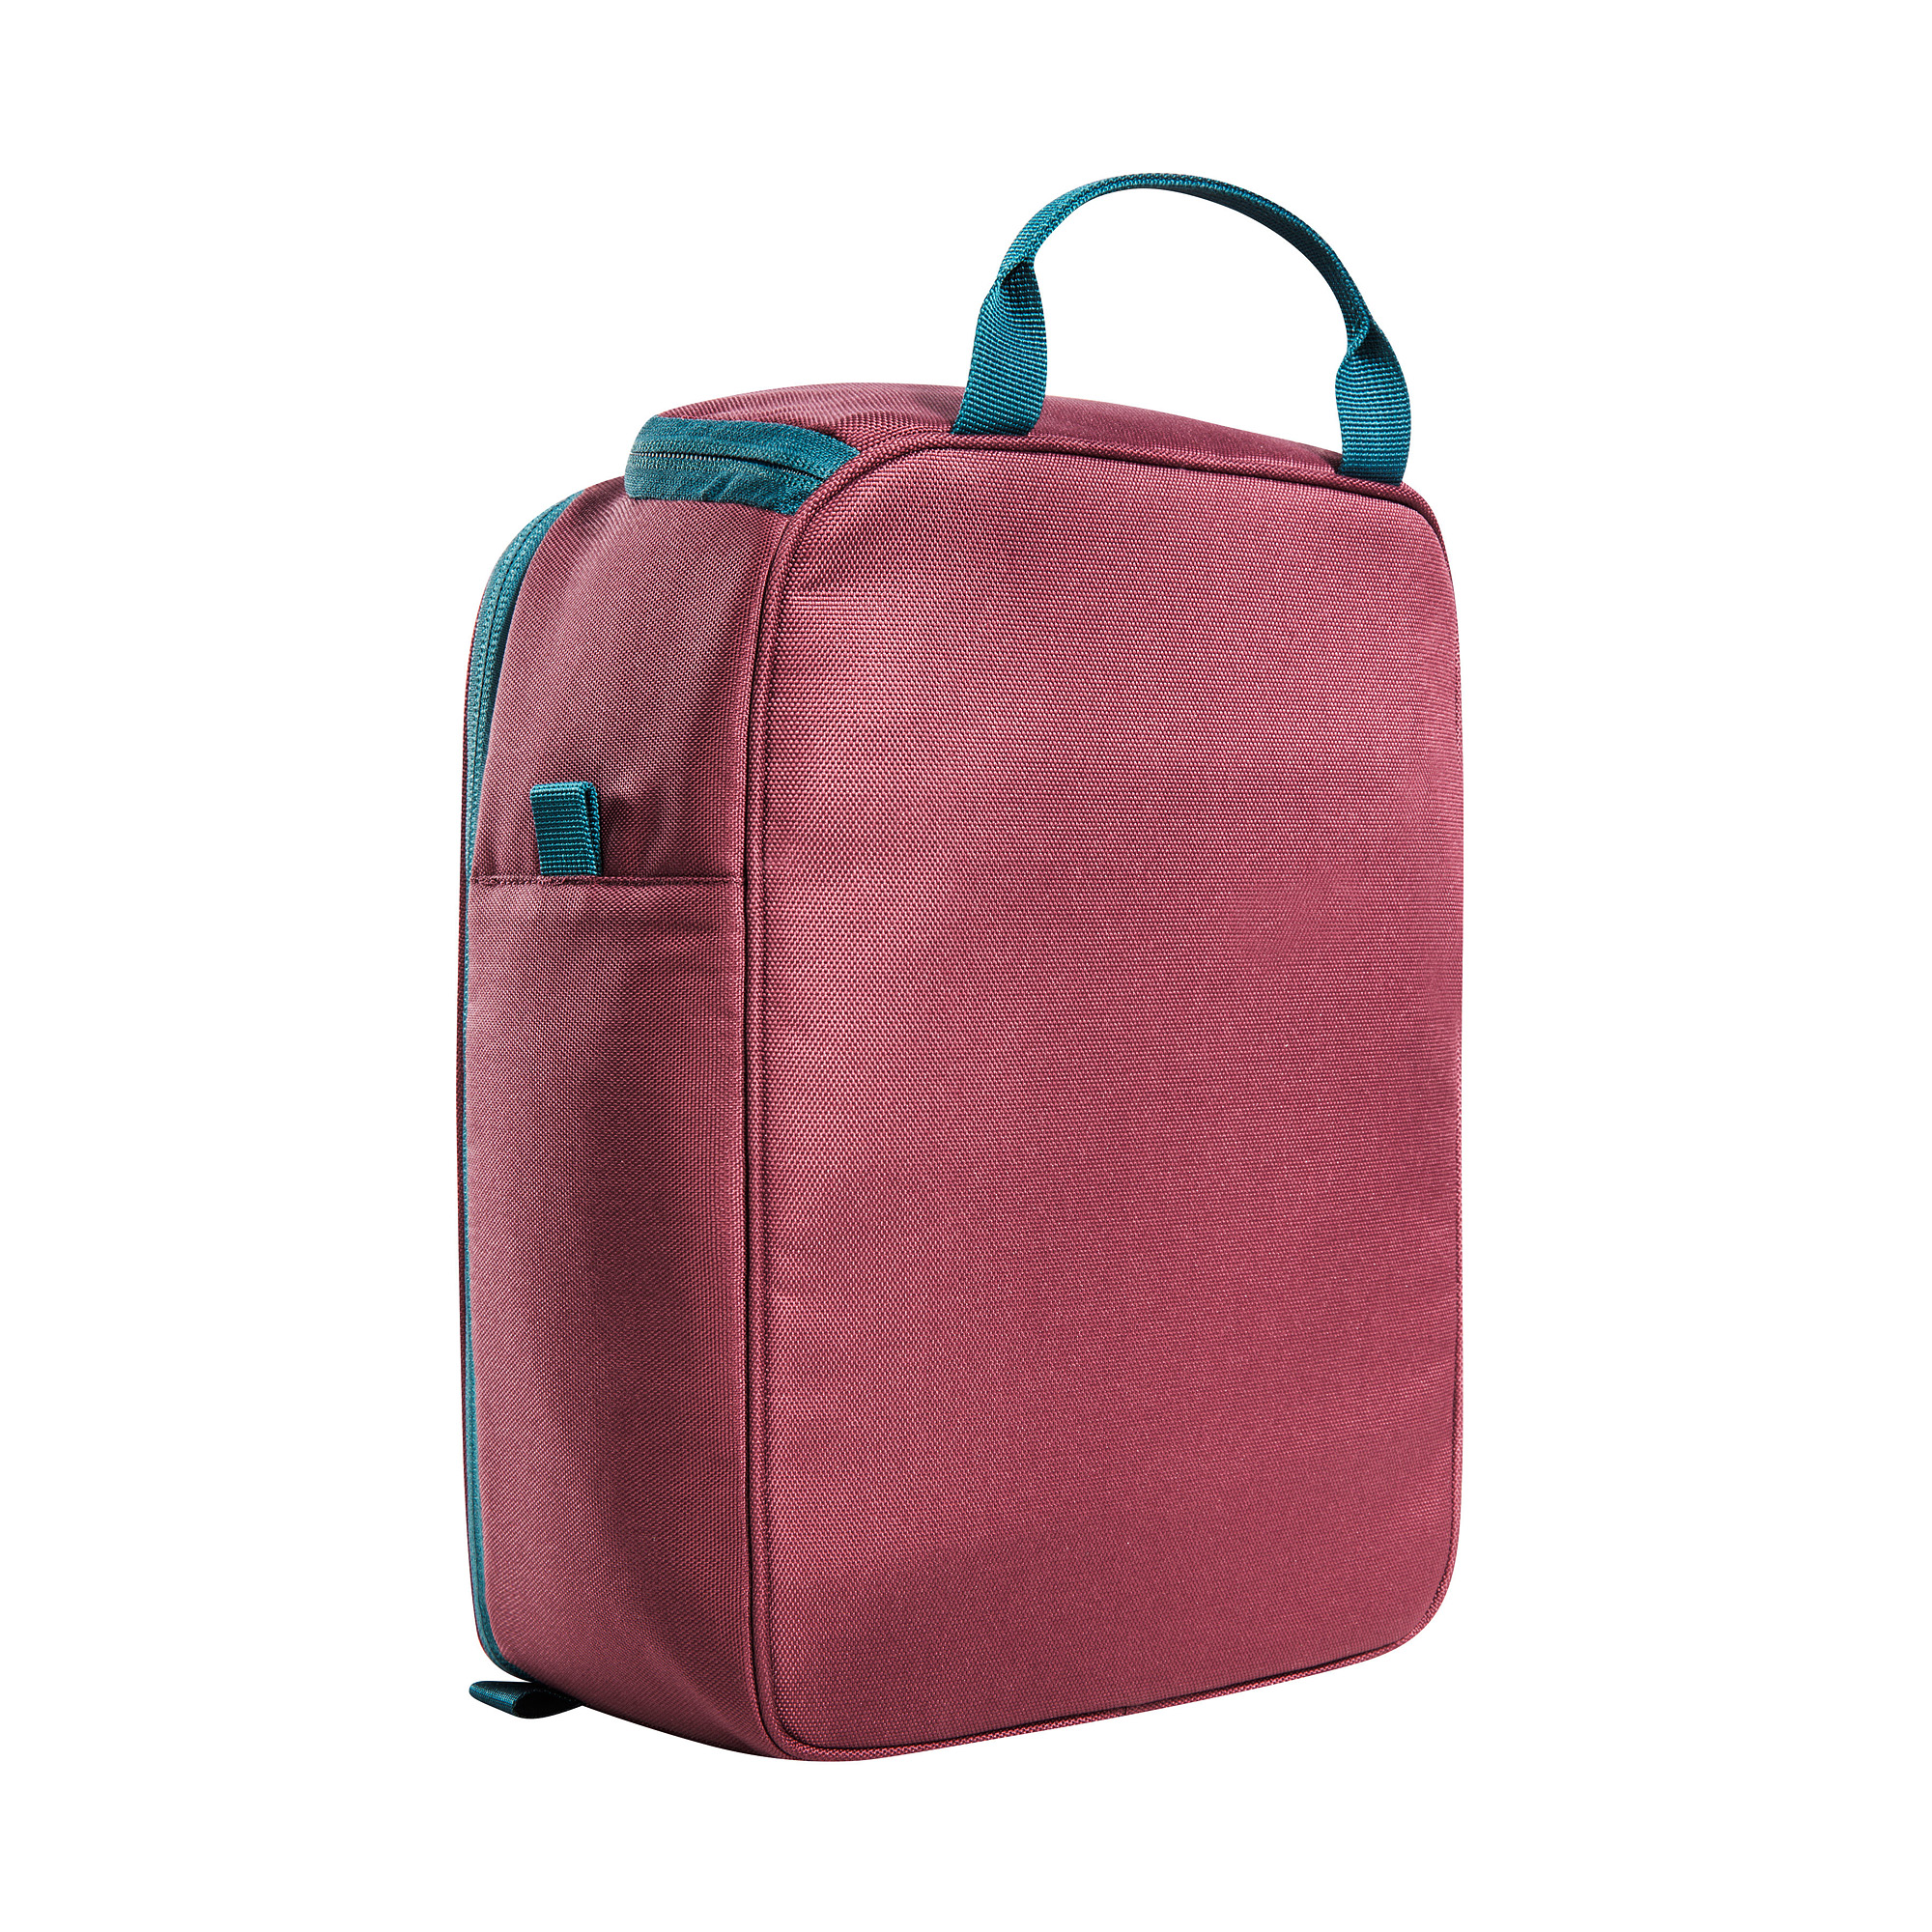 Tatonka Cooler Bag S bordeaux red rot Sonstige Taschen 4013236336306